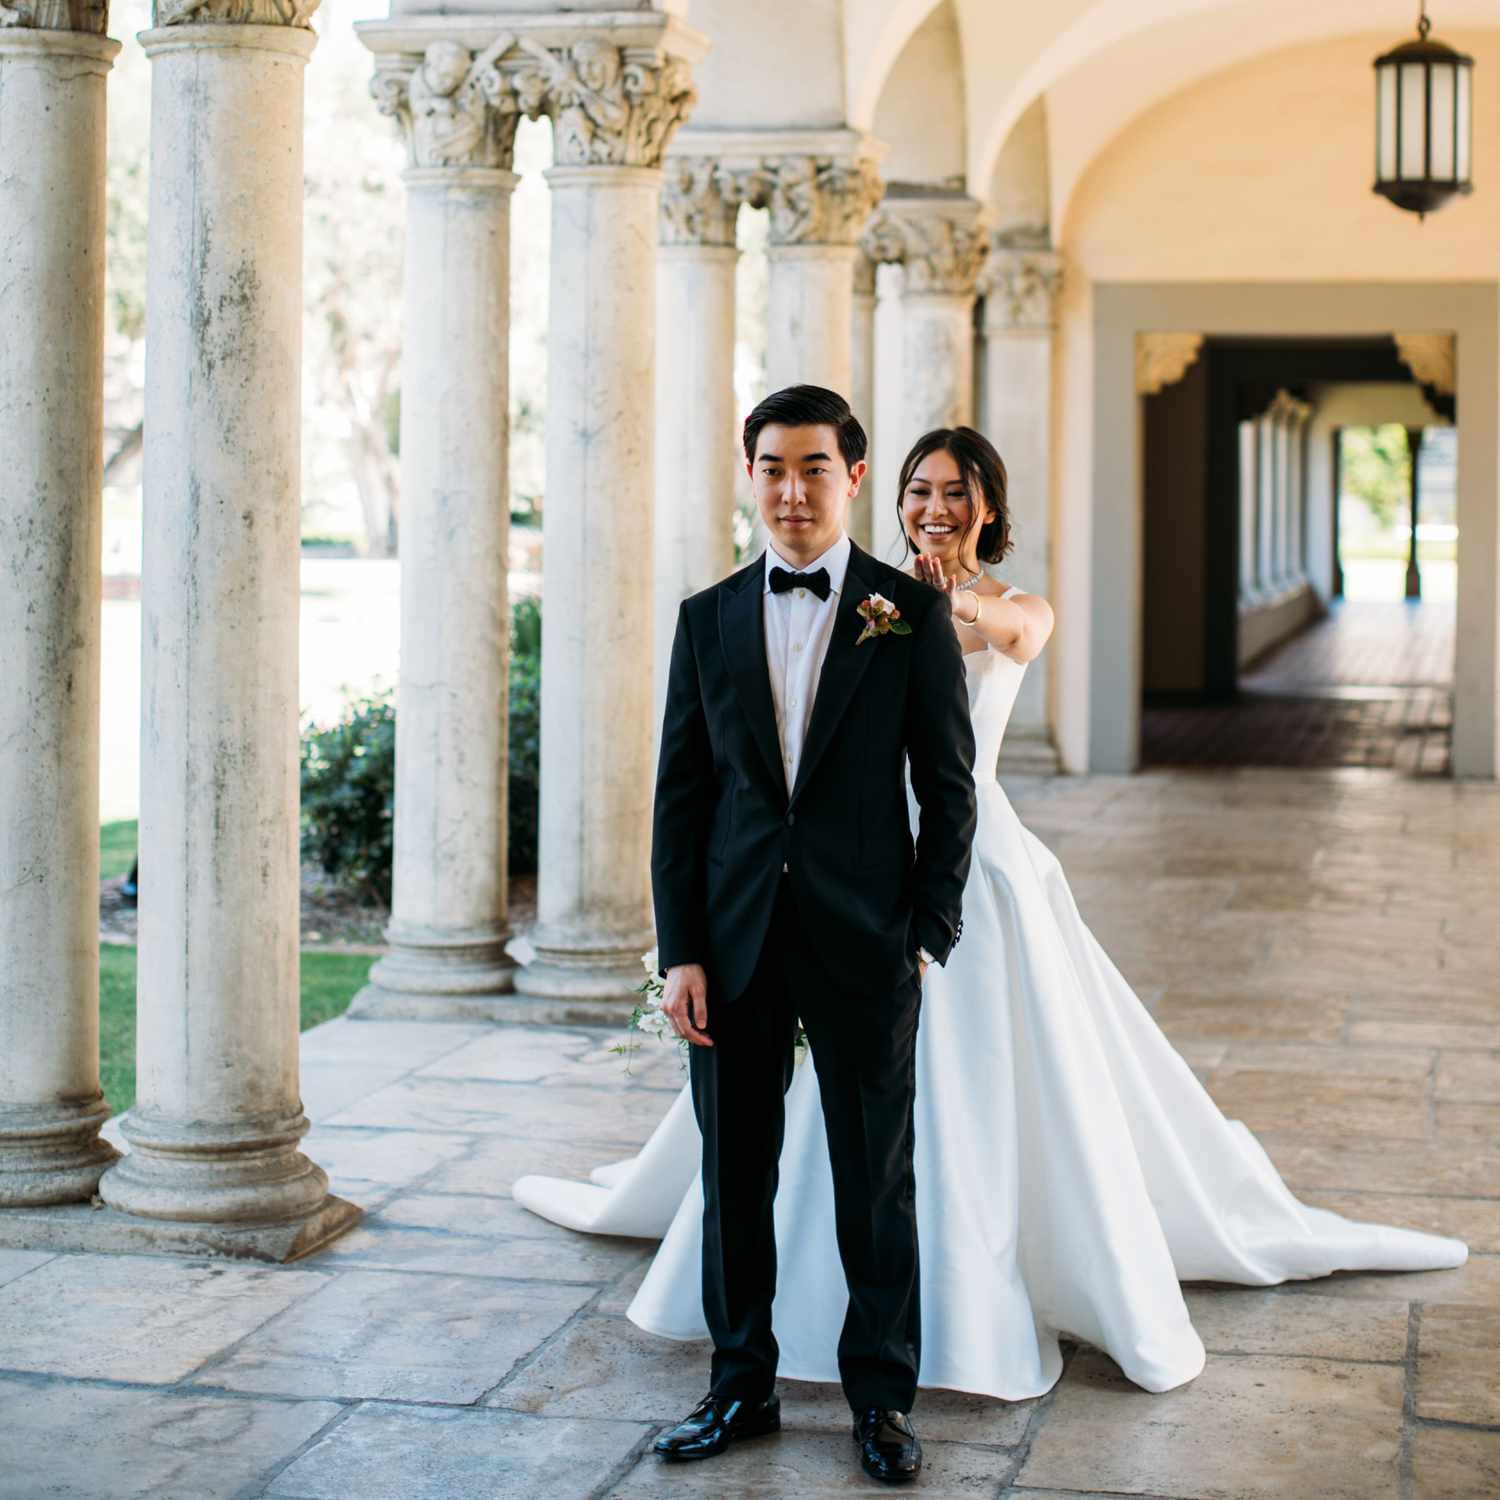 wedding photographer can transform your wedding day